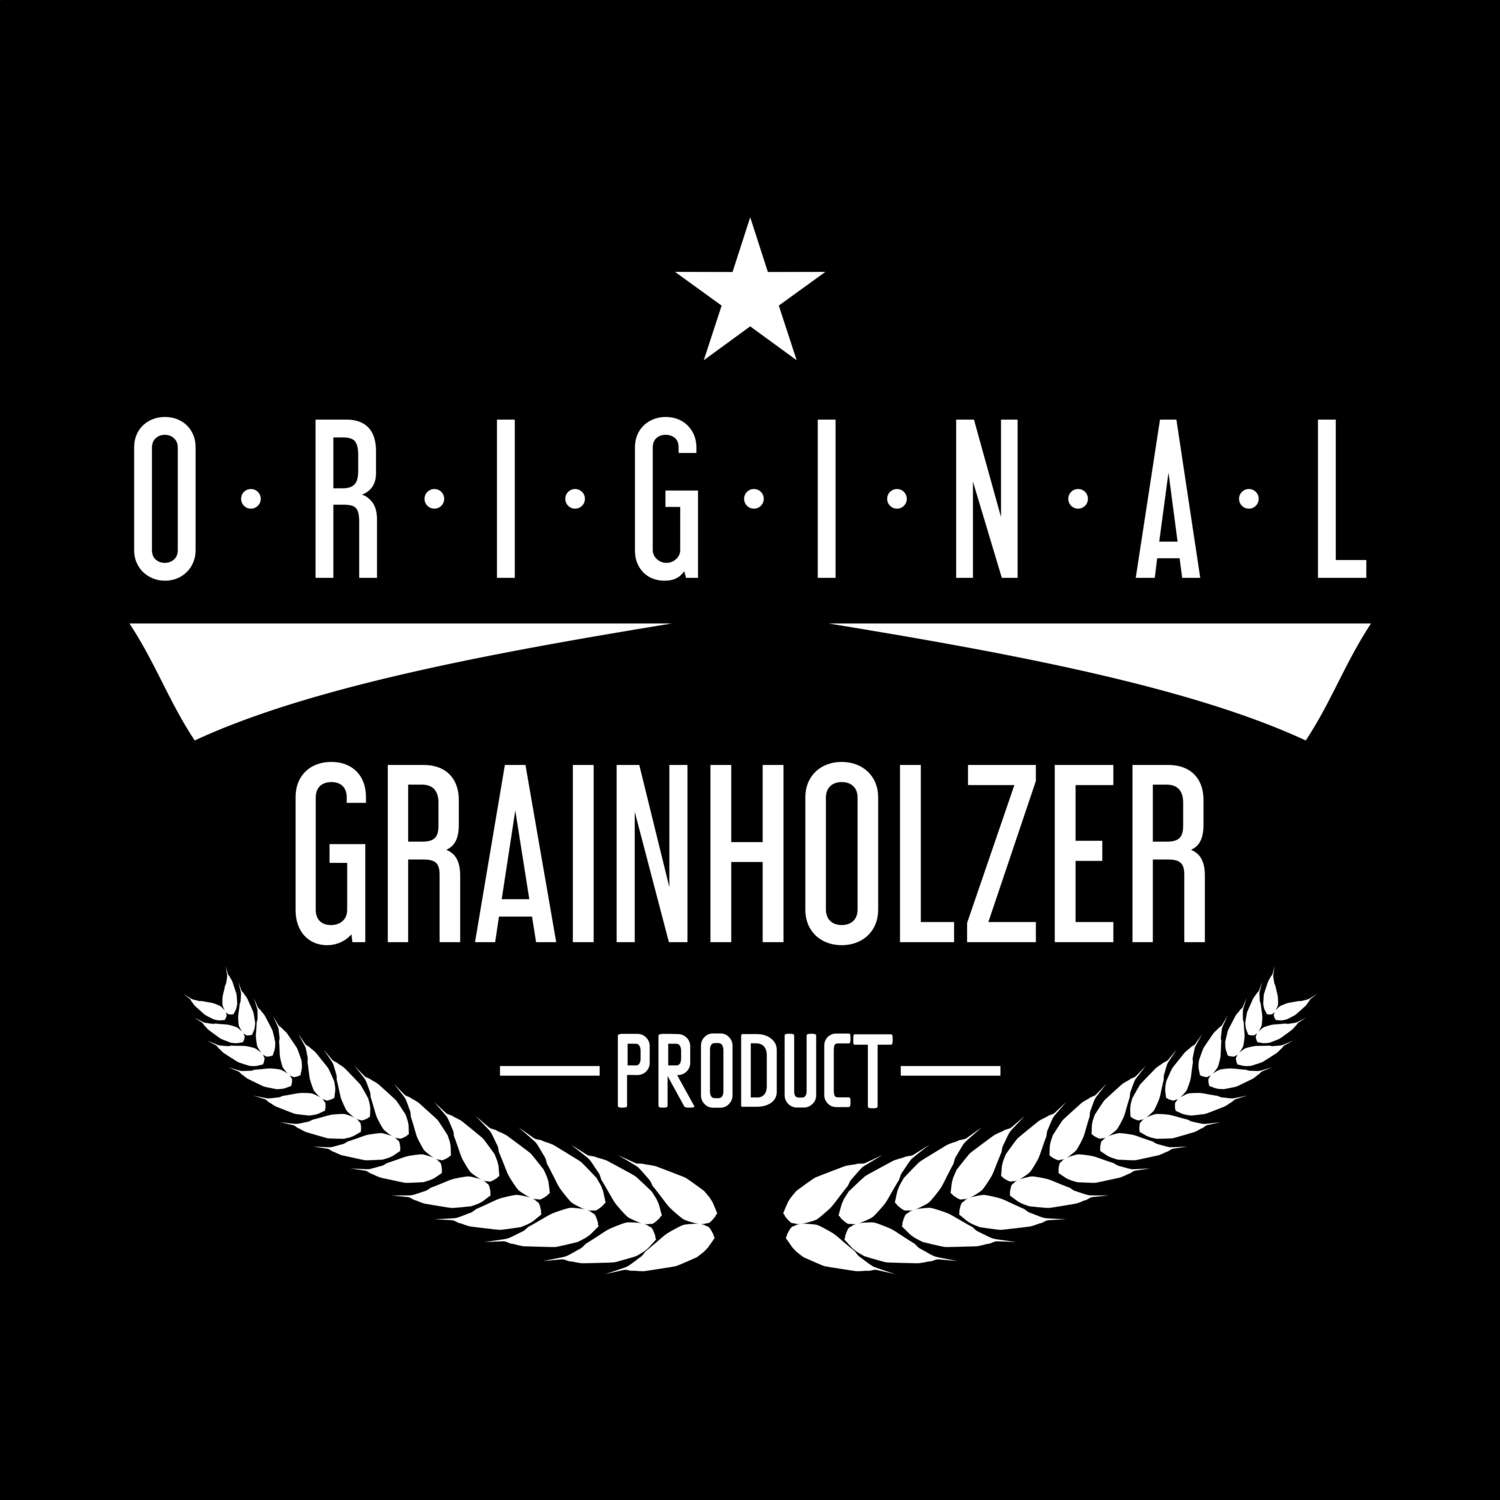 Grainholzer T-Shirt »Original Product«